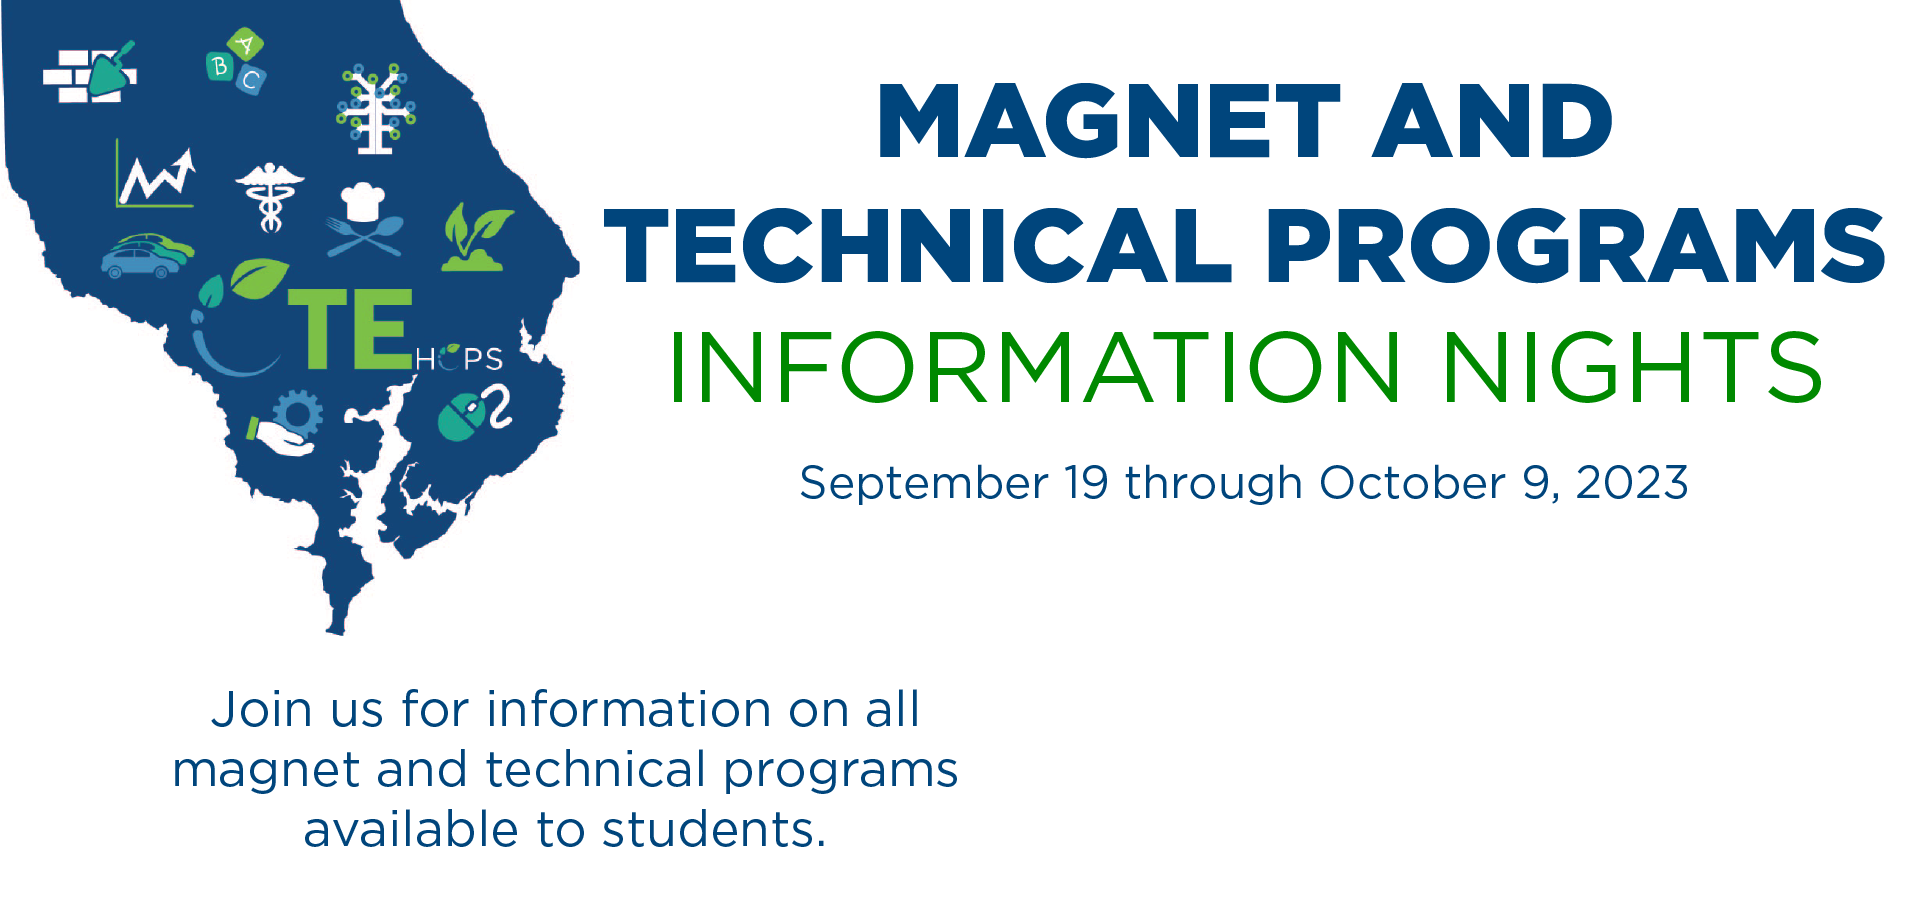 Magnet and Technical Program Information Nights, September 19 through October 9